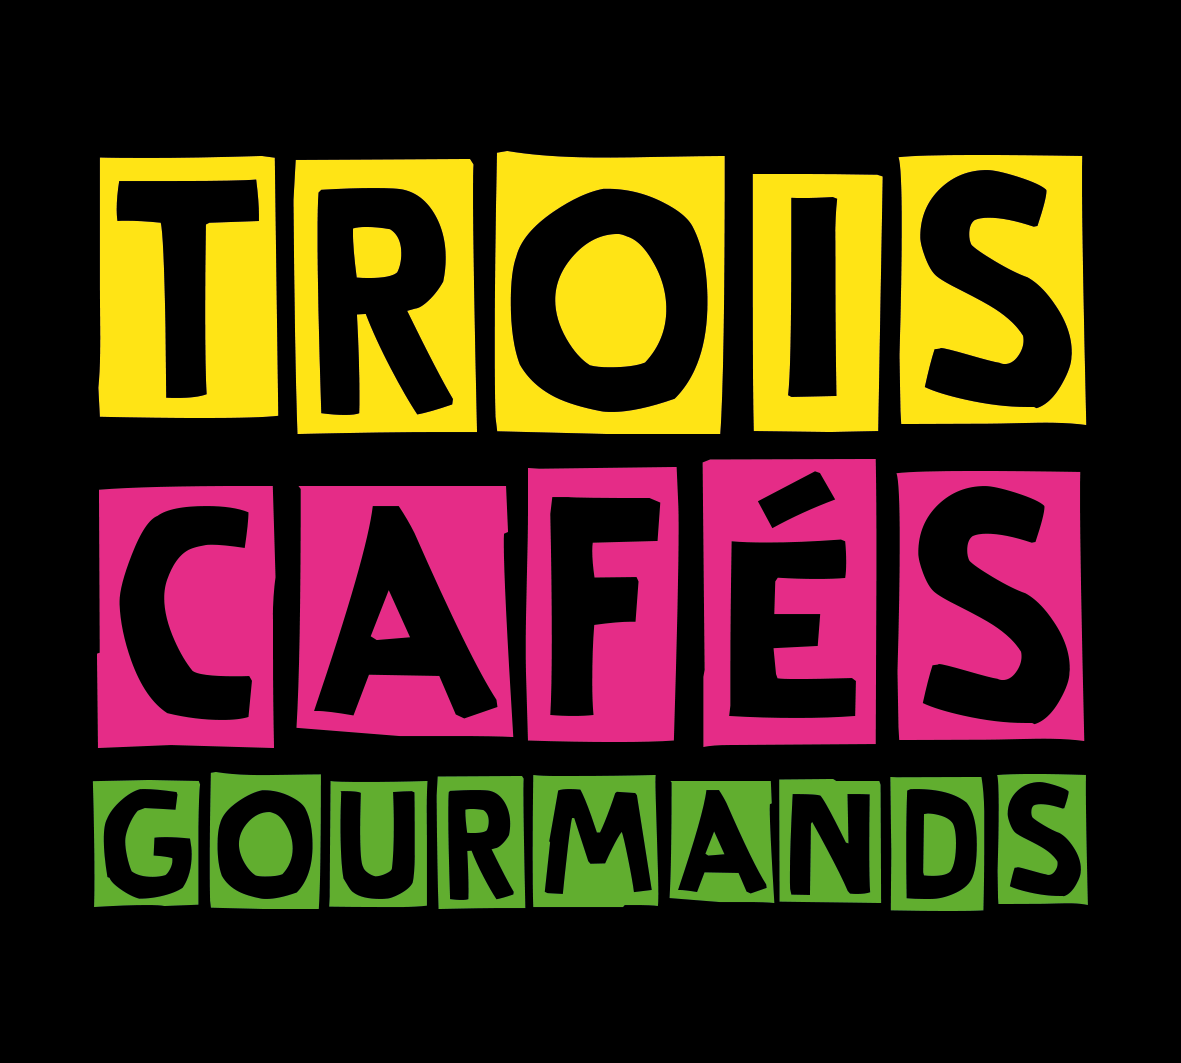 TROIS CAFES GOURMANDS - A NOS SOUVENIRS